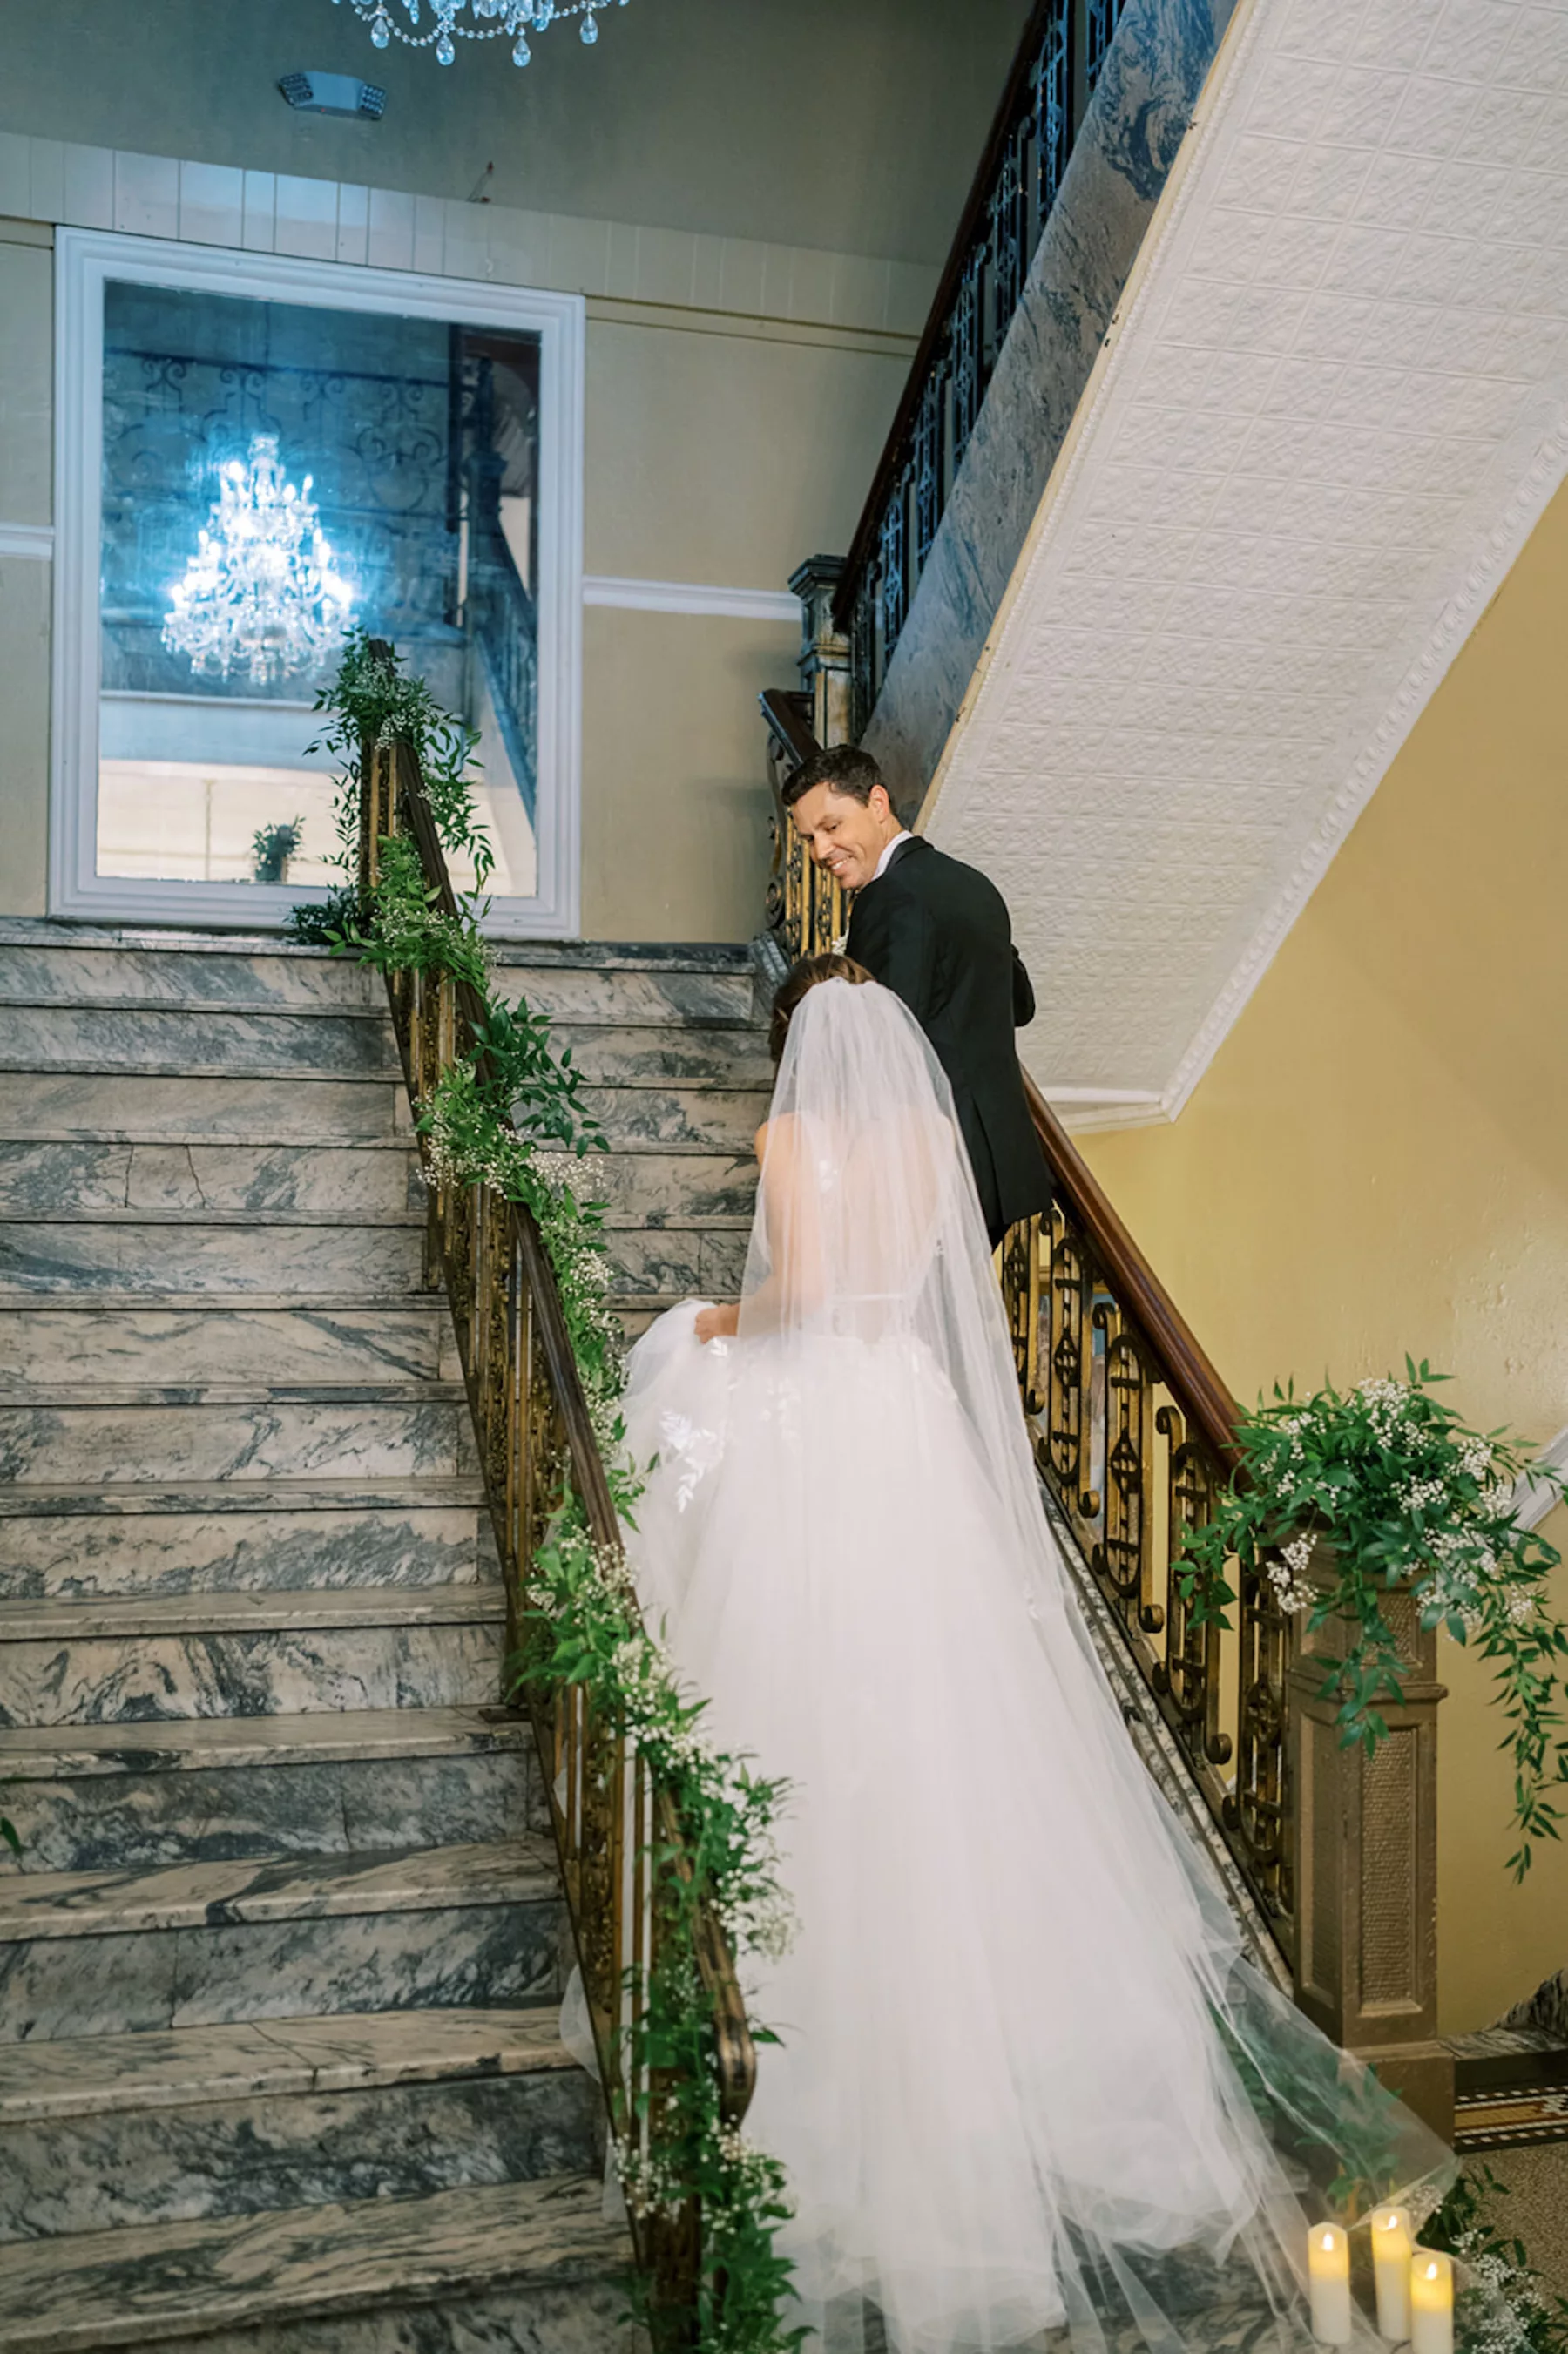 Bride and Groom Stair Wedding Portrait | Greenery Banister Garland Decor Ideas | Venue Centro Asturiano